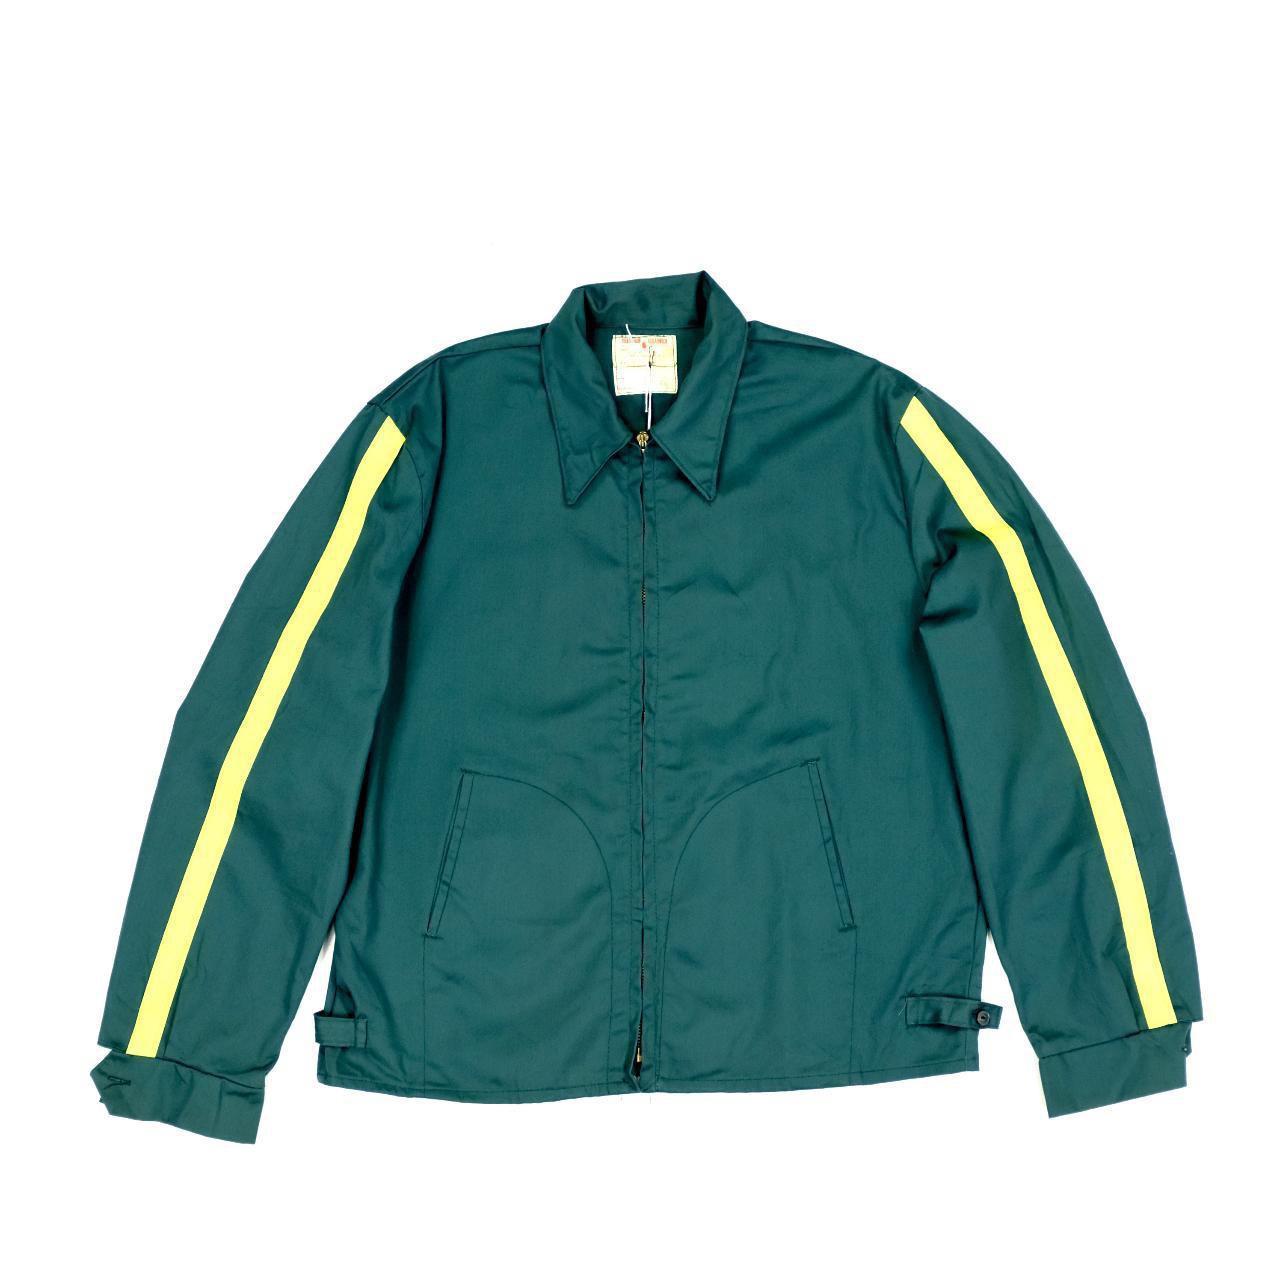 Vintage Zip Up Jacket / 1960s workwear jacket